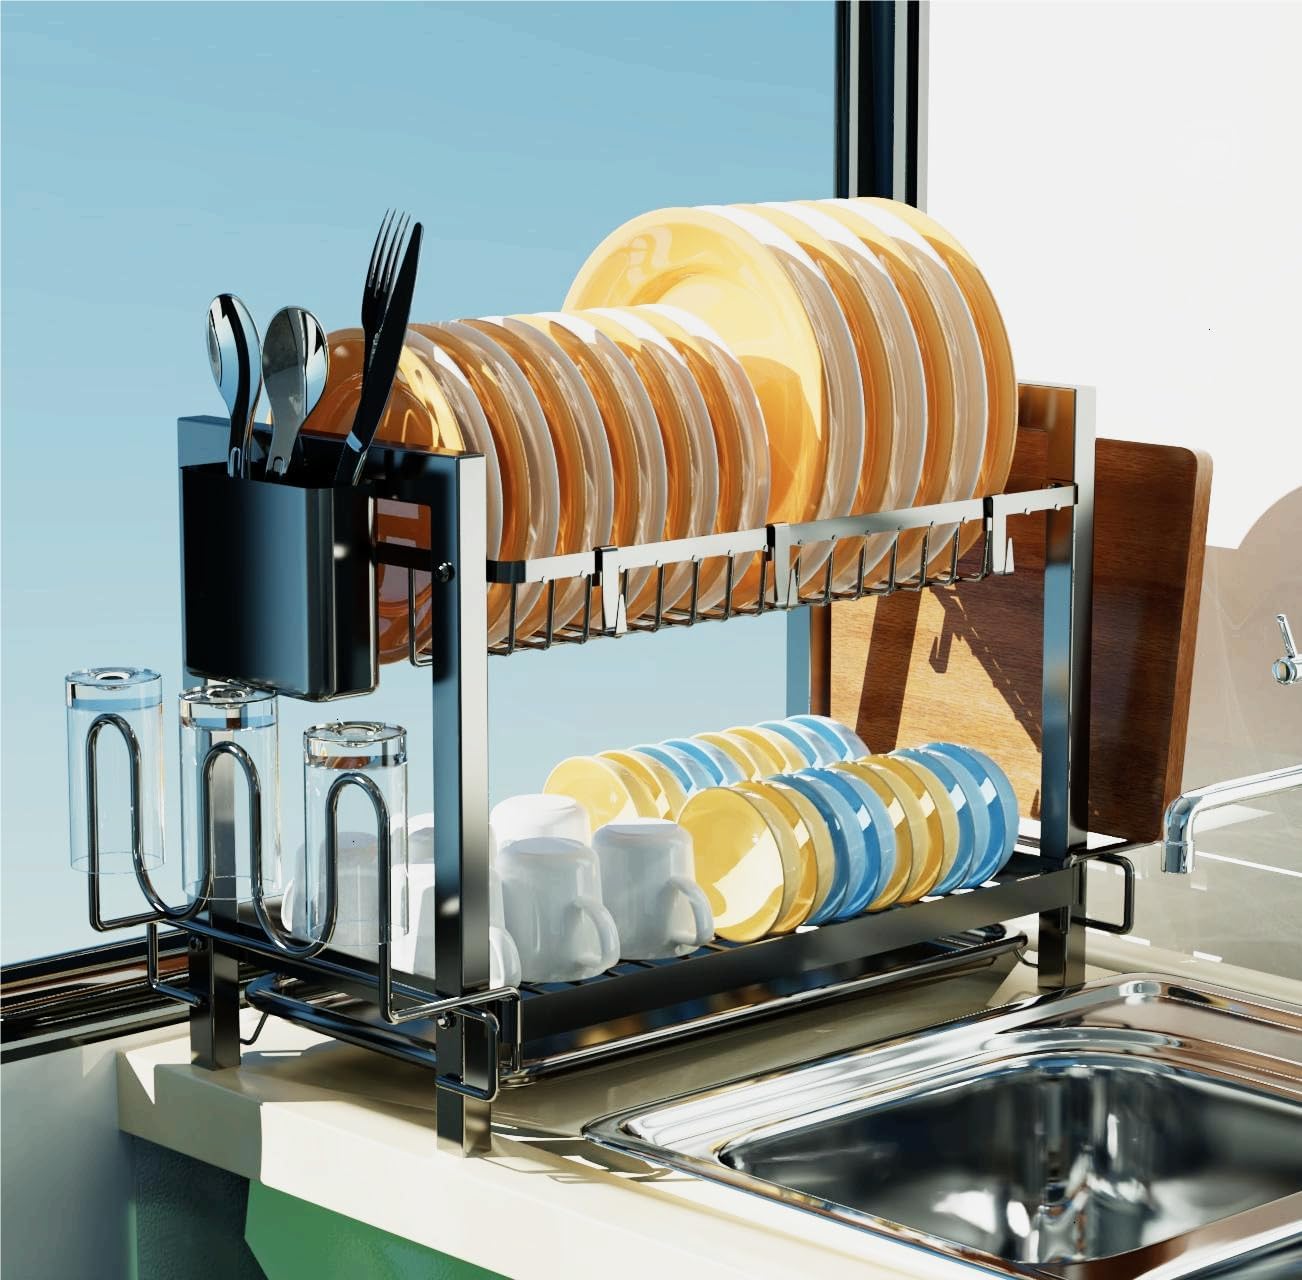 2 Tier Dish Drying Rack,Kitchen Dish Rack With Utensil Organzie